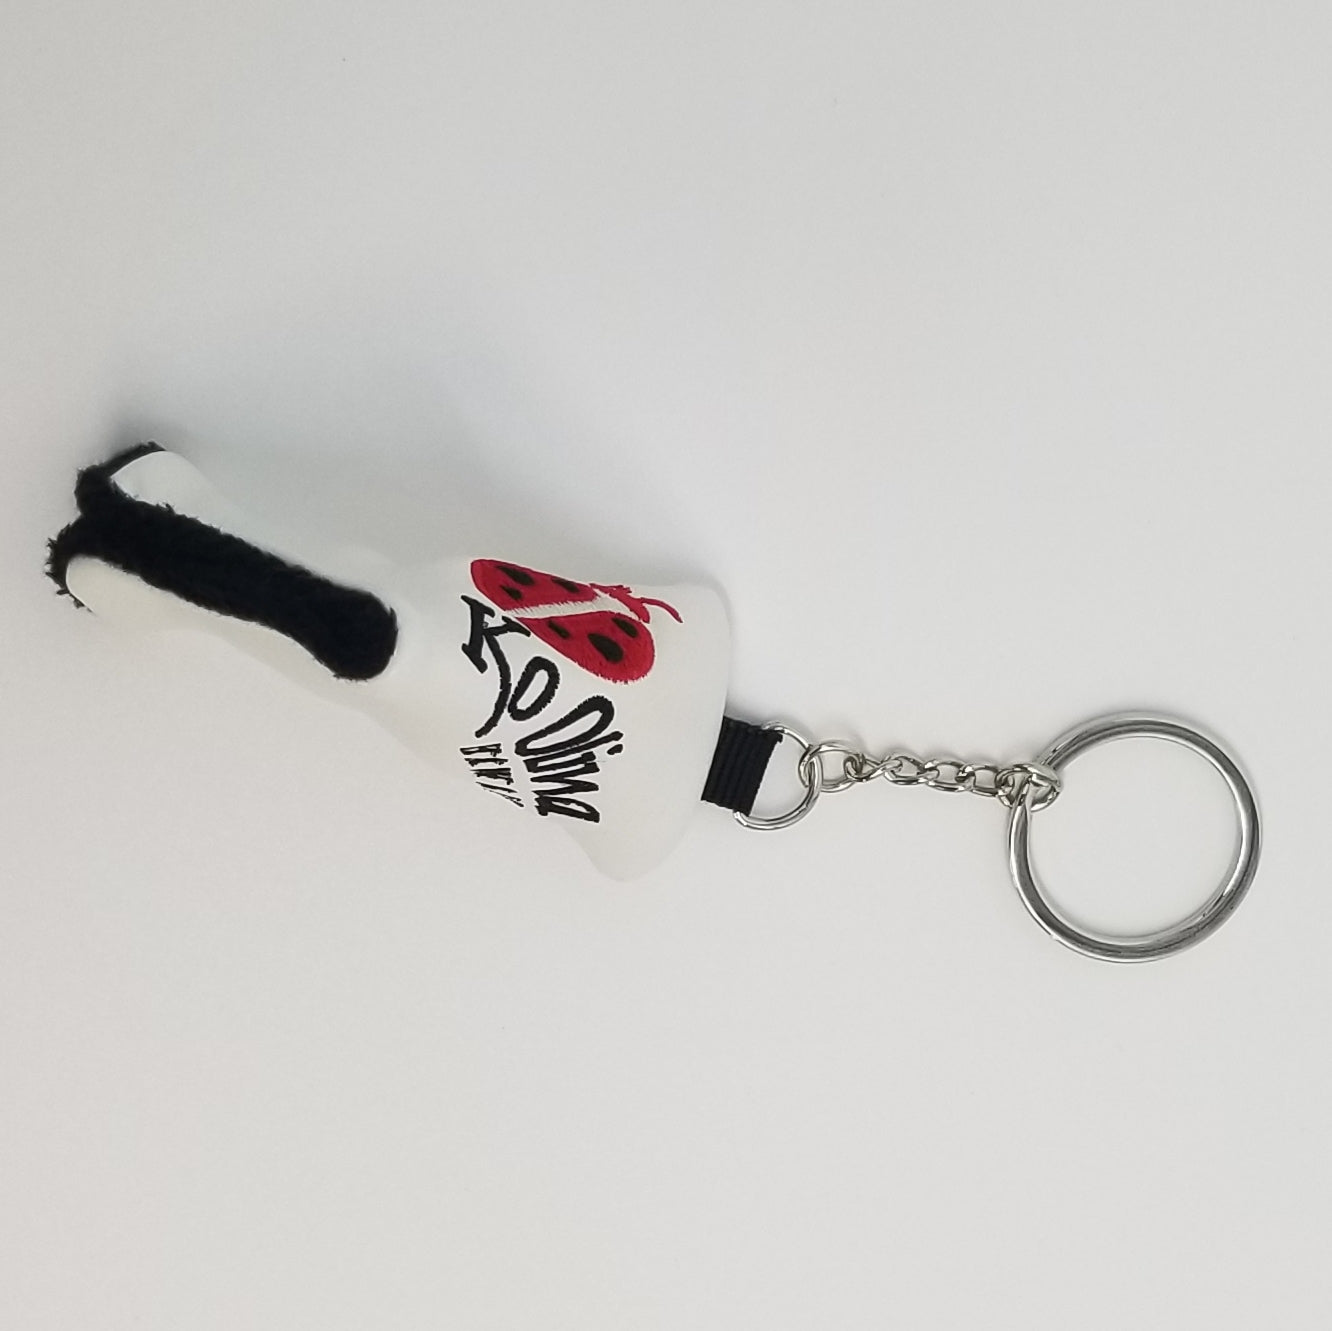 Ko Olina Mini Putter Cover Keychain